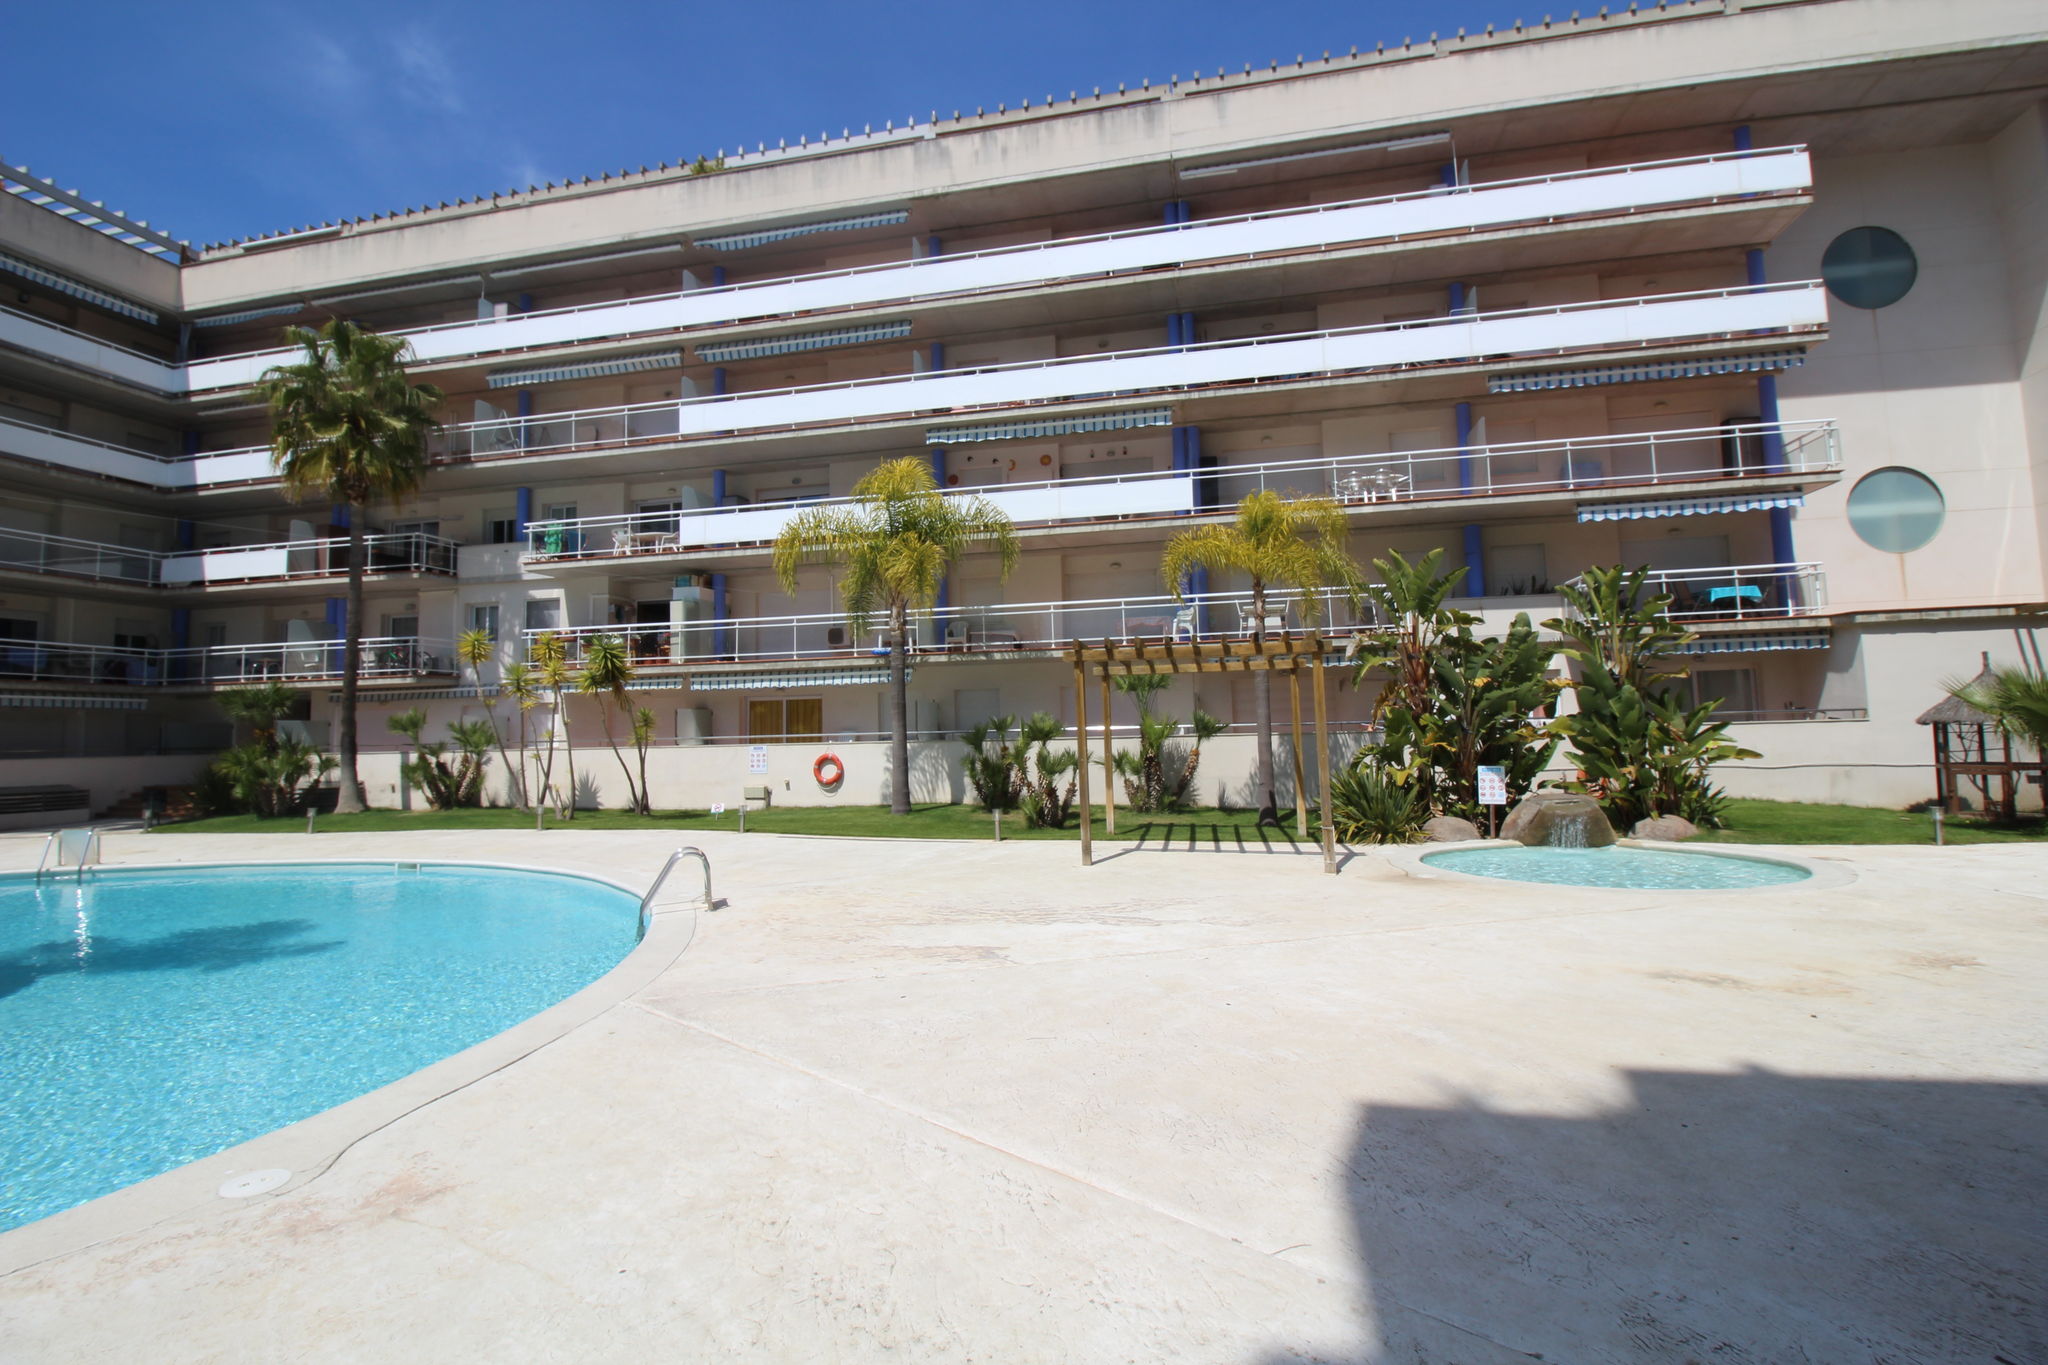 Apartment complex with communal pool in Santa Margarita (Roses)